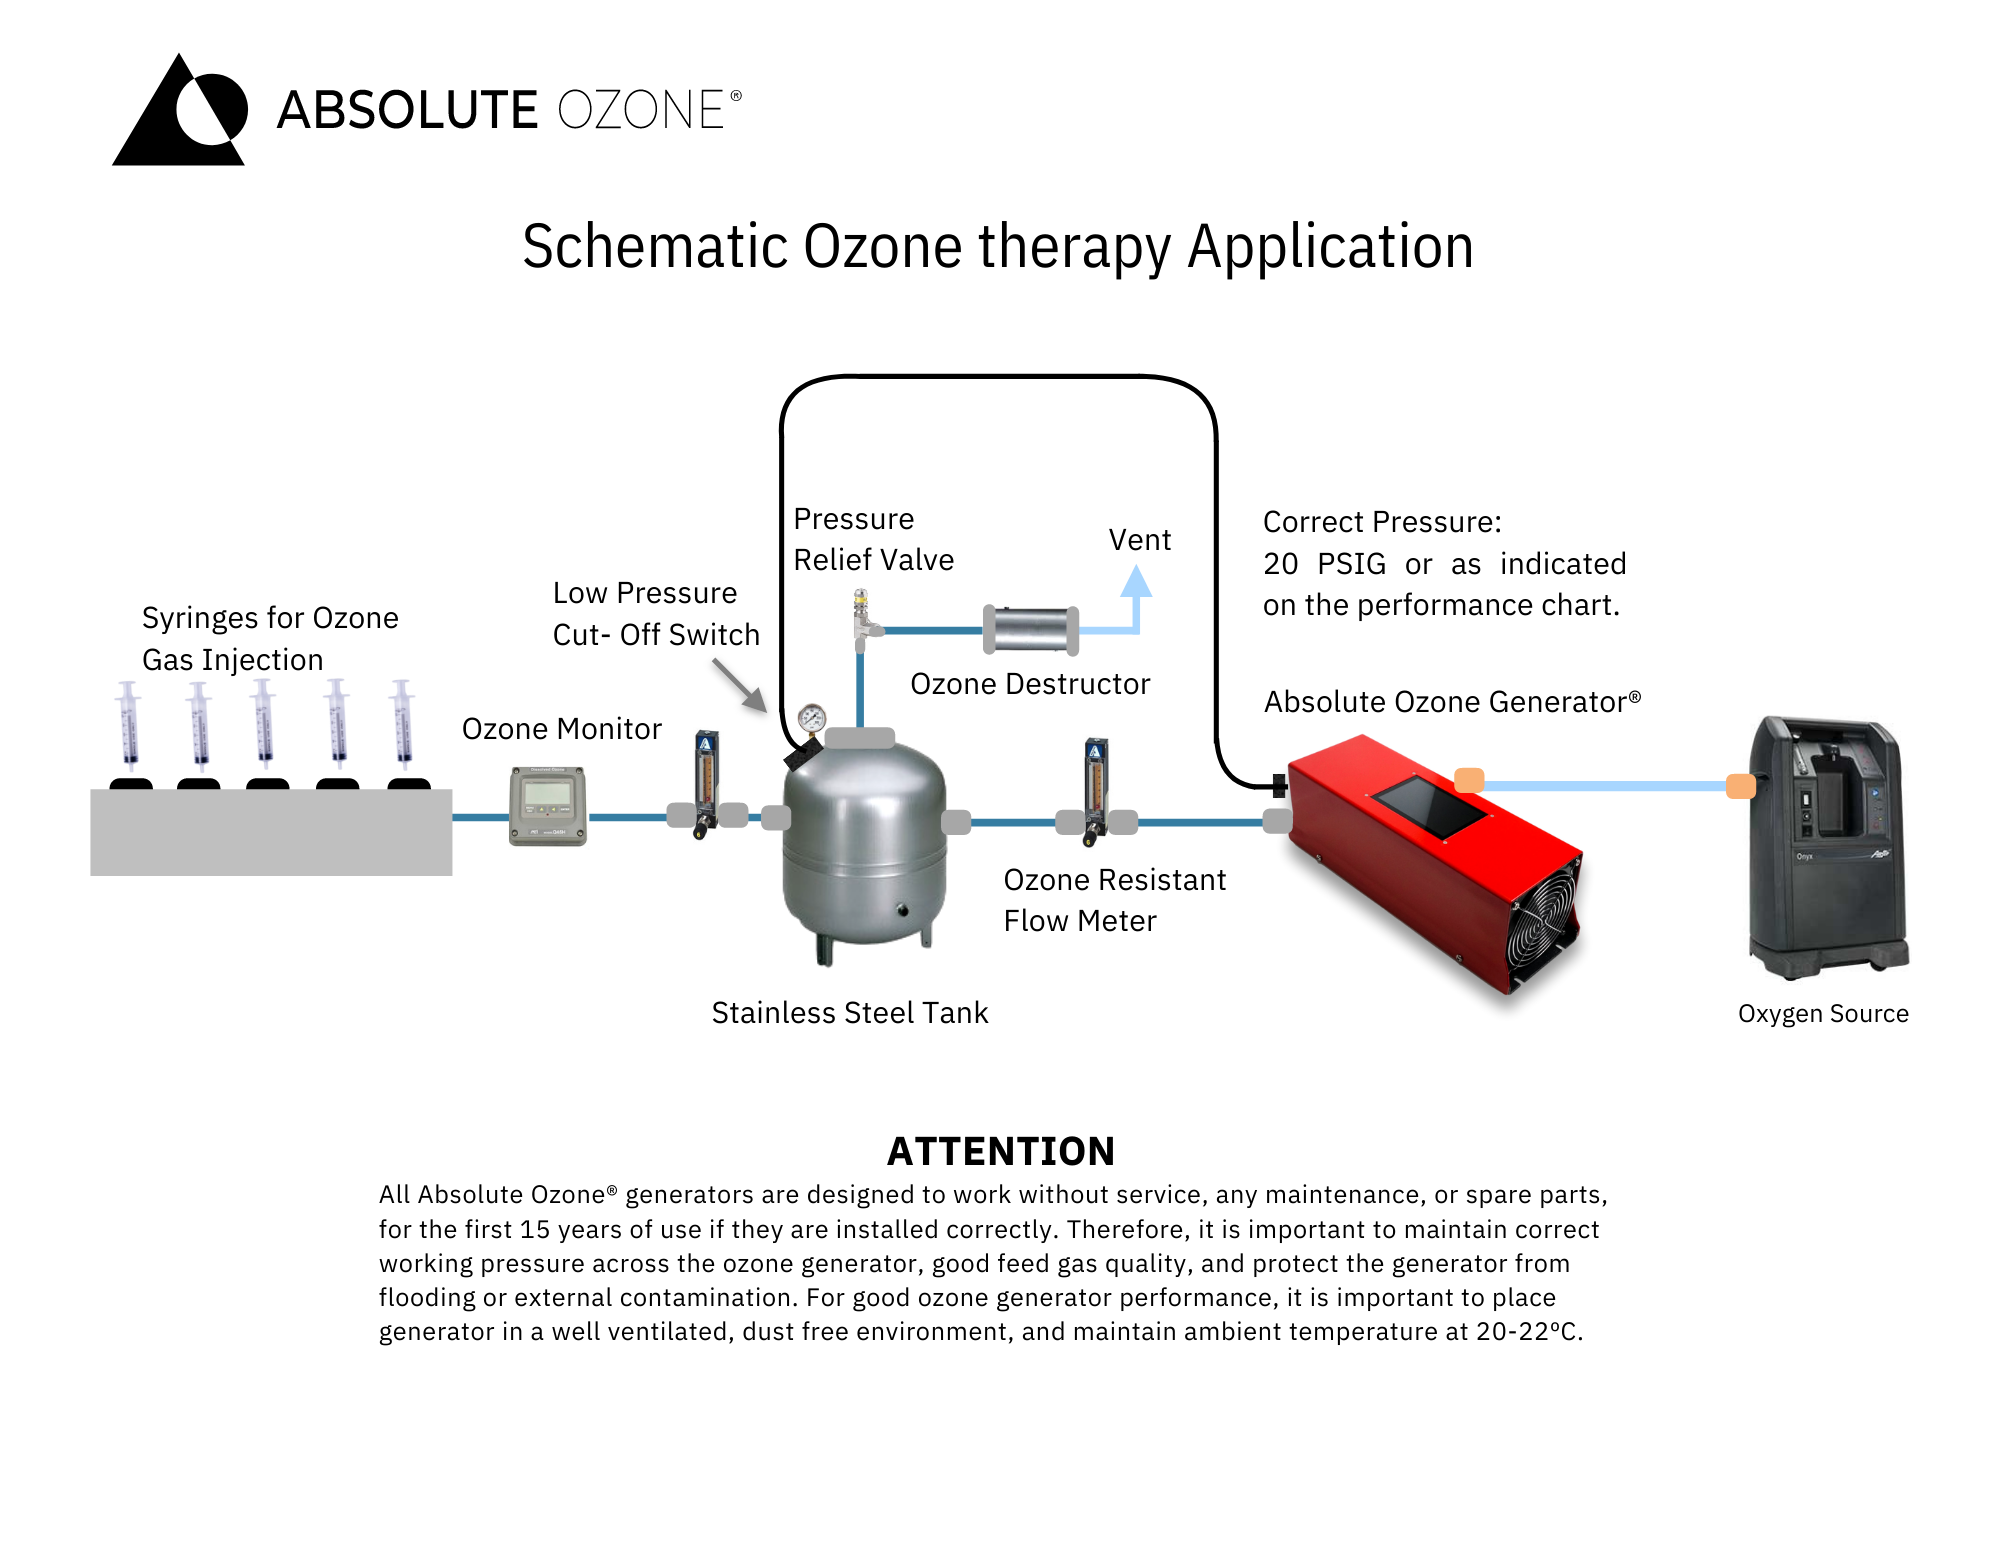 ozone therapy diagram